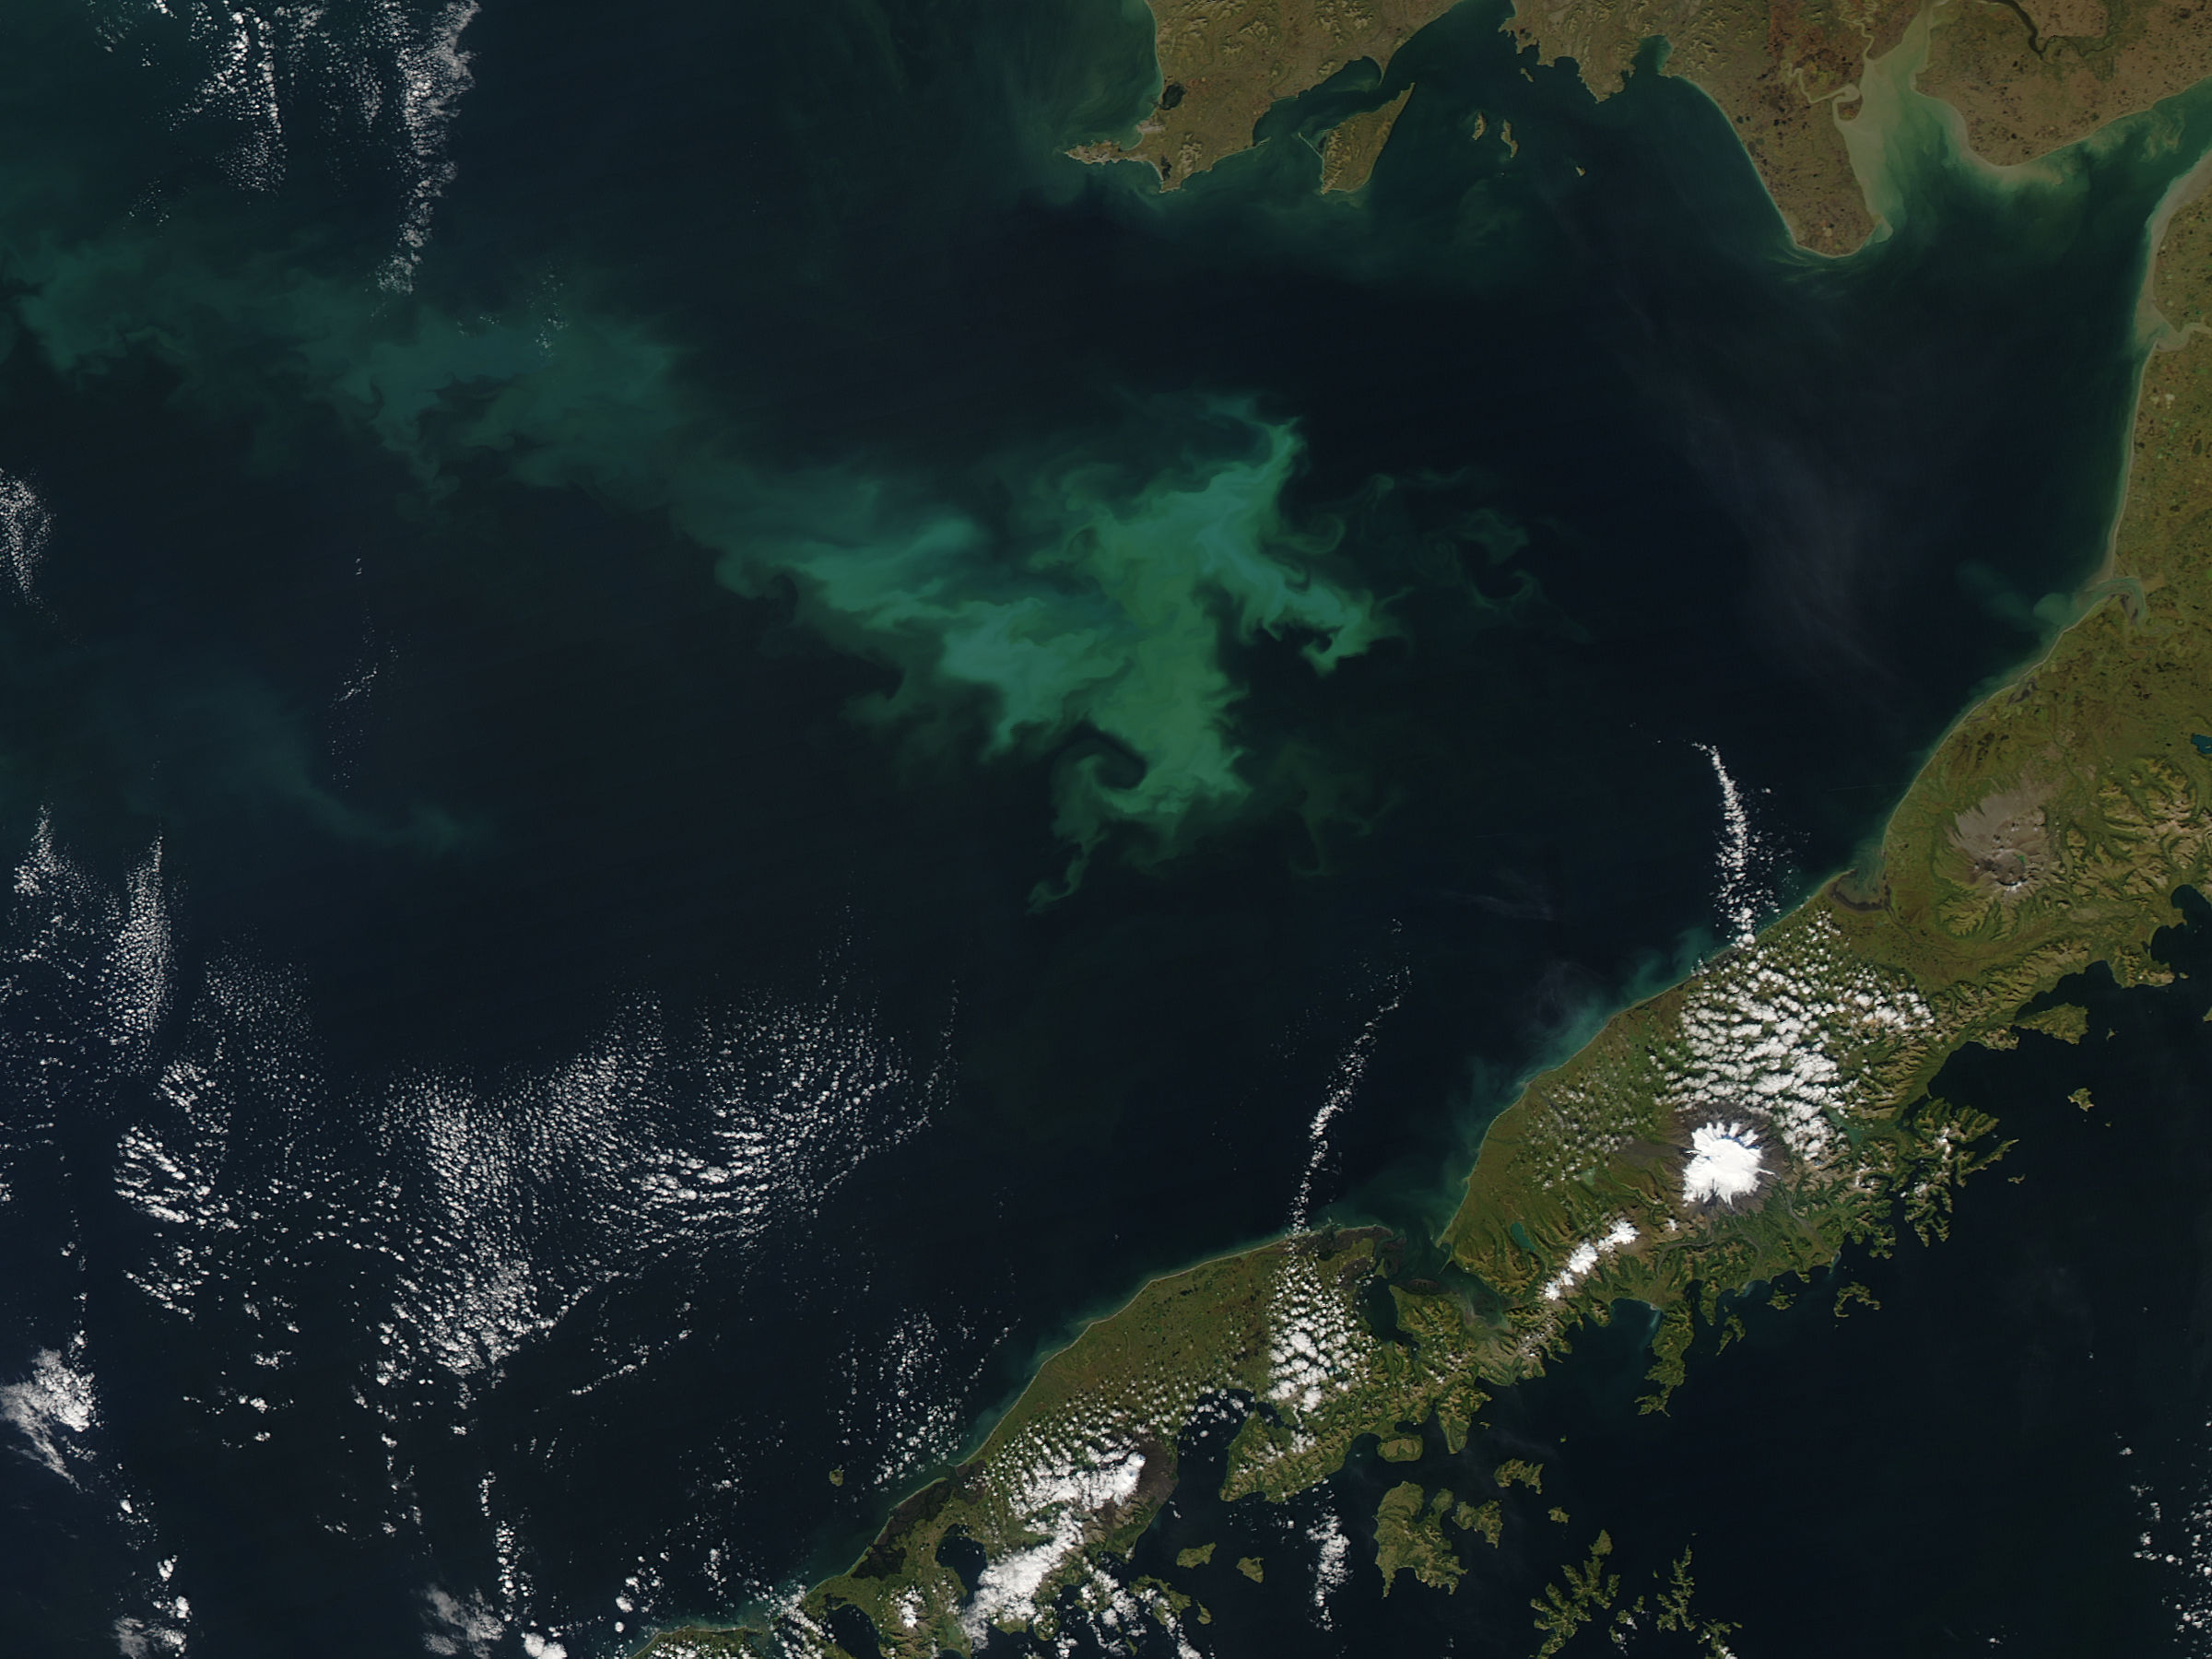 Phytoplankton bloom in Bristol Bay, Alaska - related image preview